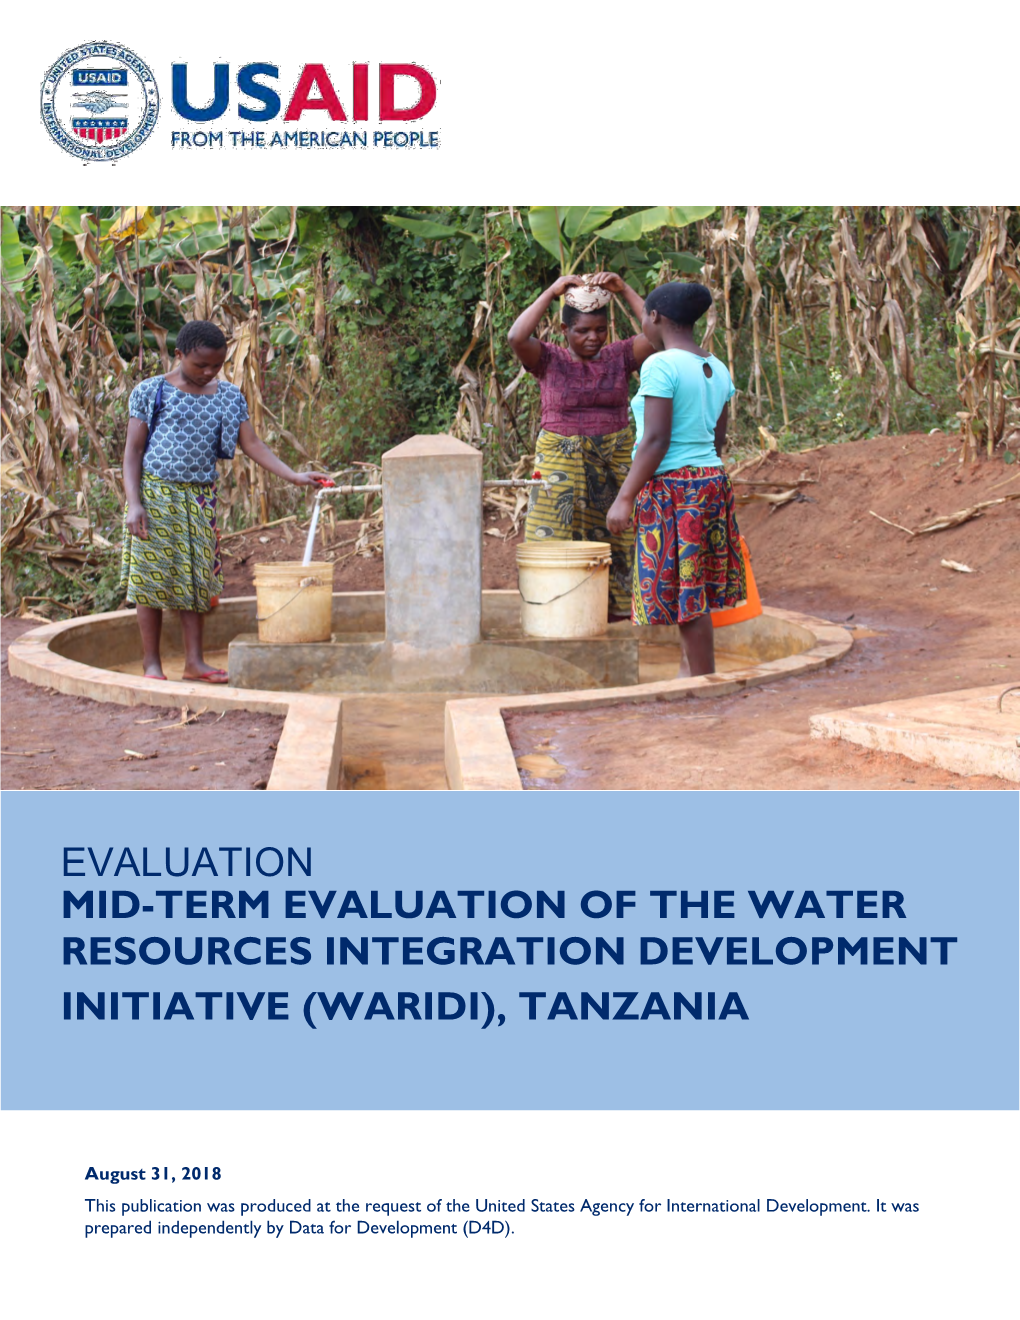 Mid-Term Evaluation of the Water Resources Integration Development Initiative (Waridi), Tanzania